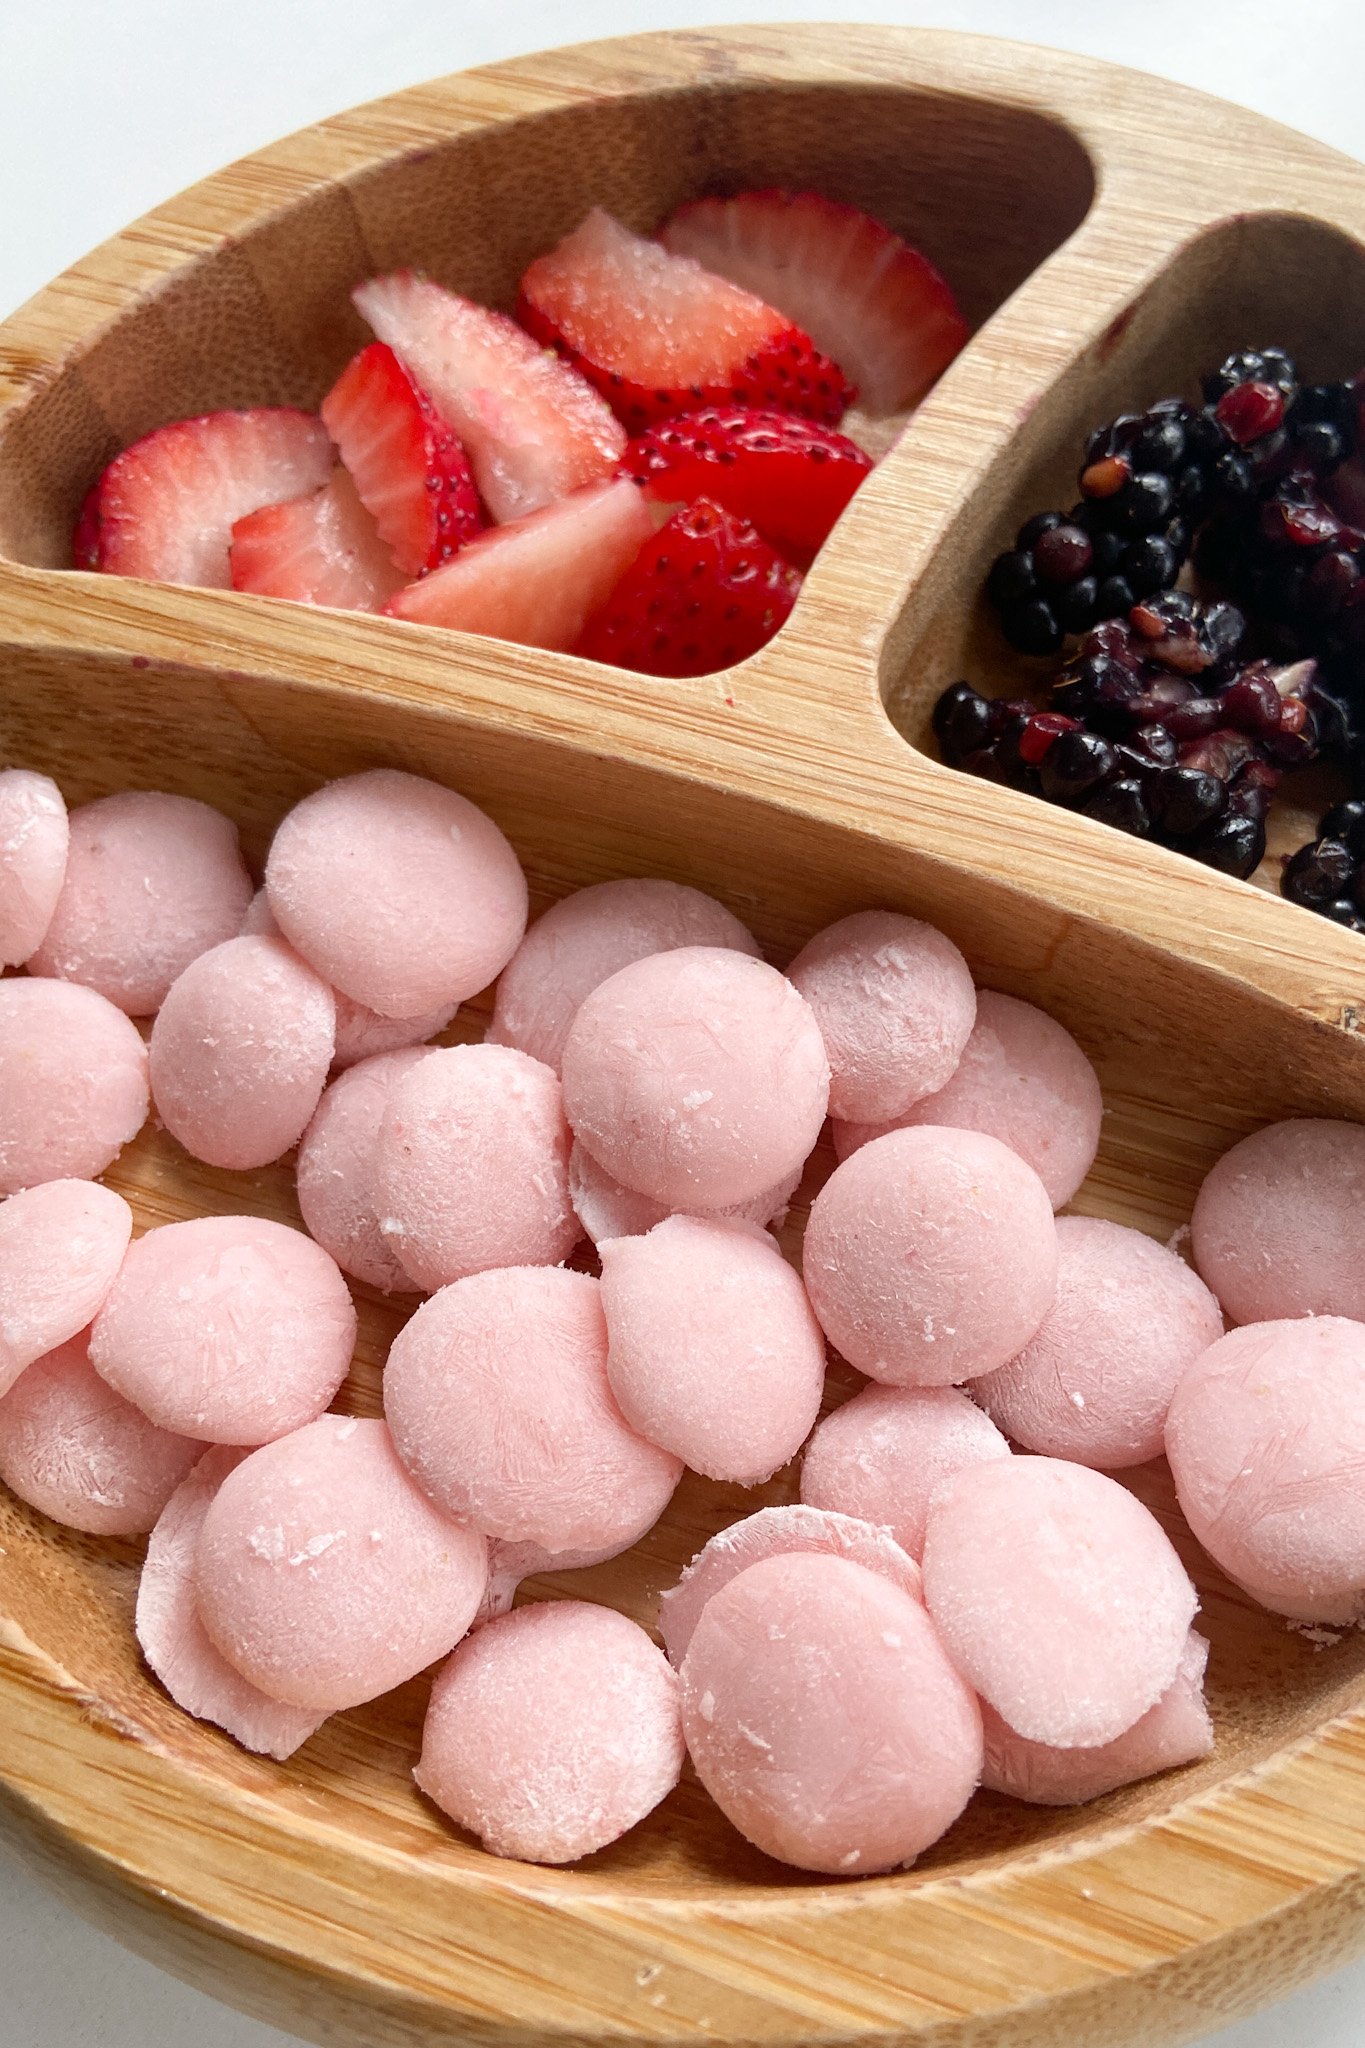 Strawberry banana yogurt melts served with sliced strawberries and blackberries